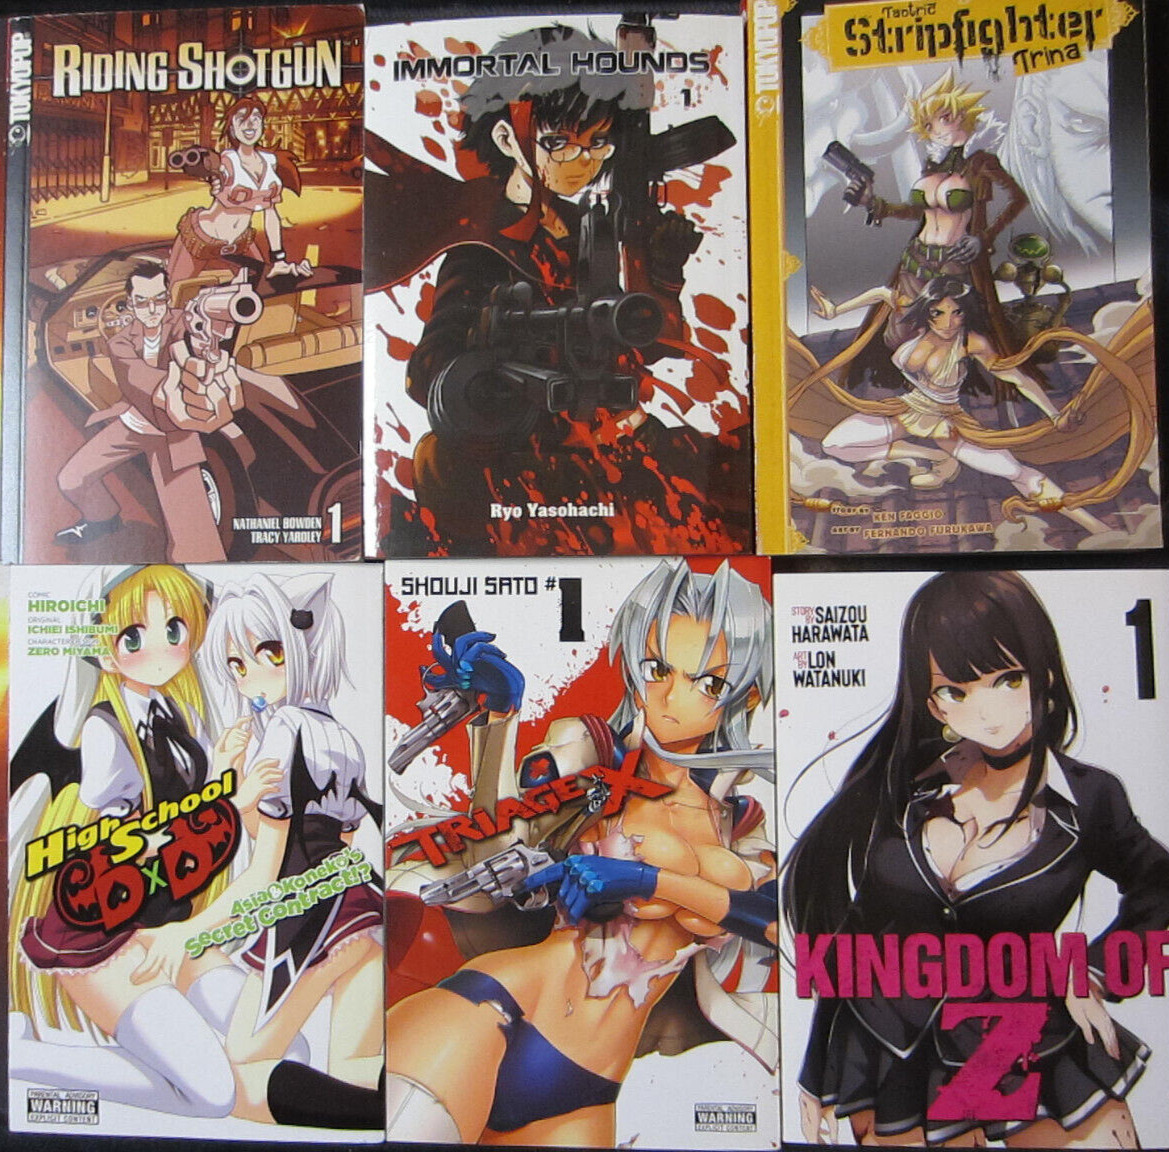 Sexy manga lot 6 books English Seven seas Tokyopop Yen press Mature content